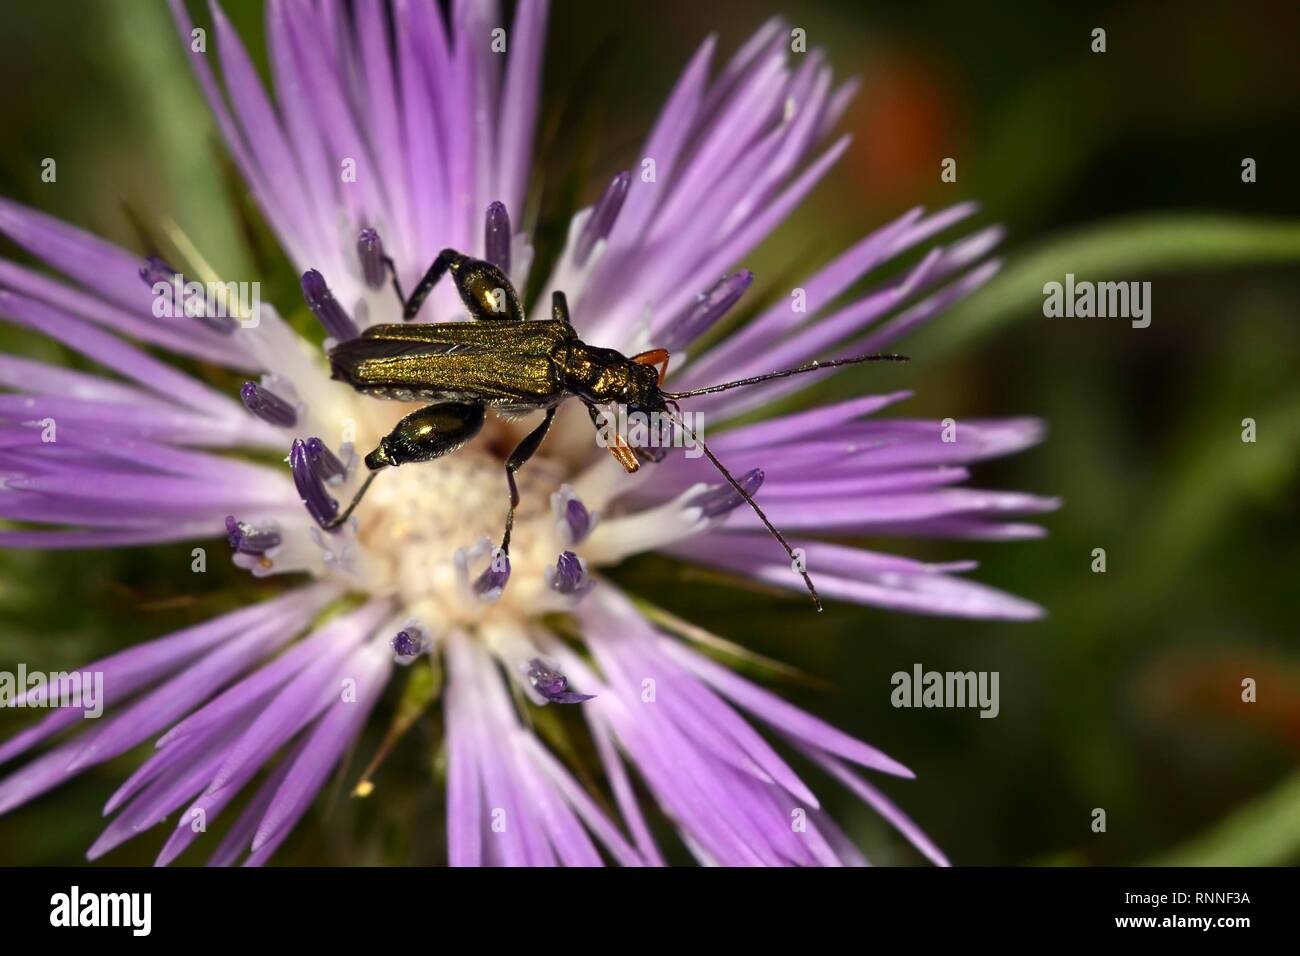 Thick-legged flower beetle (Oedemera nobilis), on purple flower of a thistle, Corfu, Greece Stock Photo